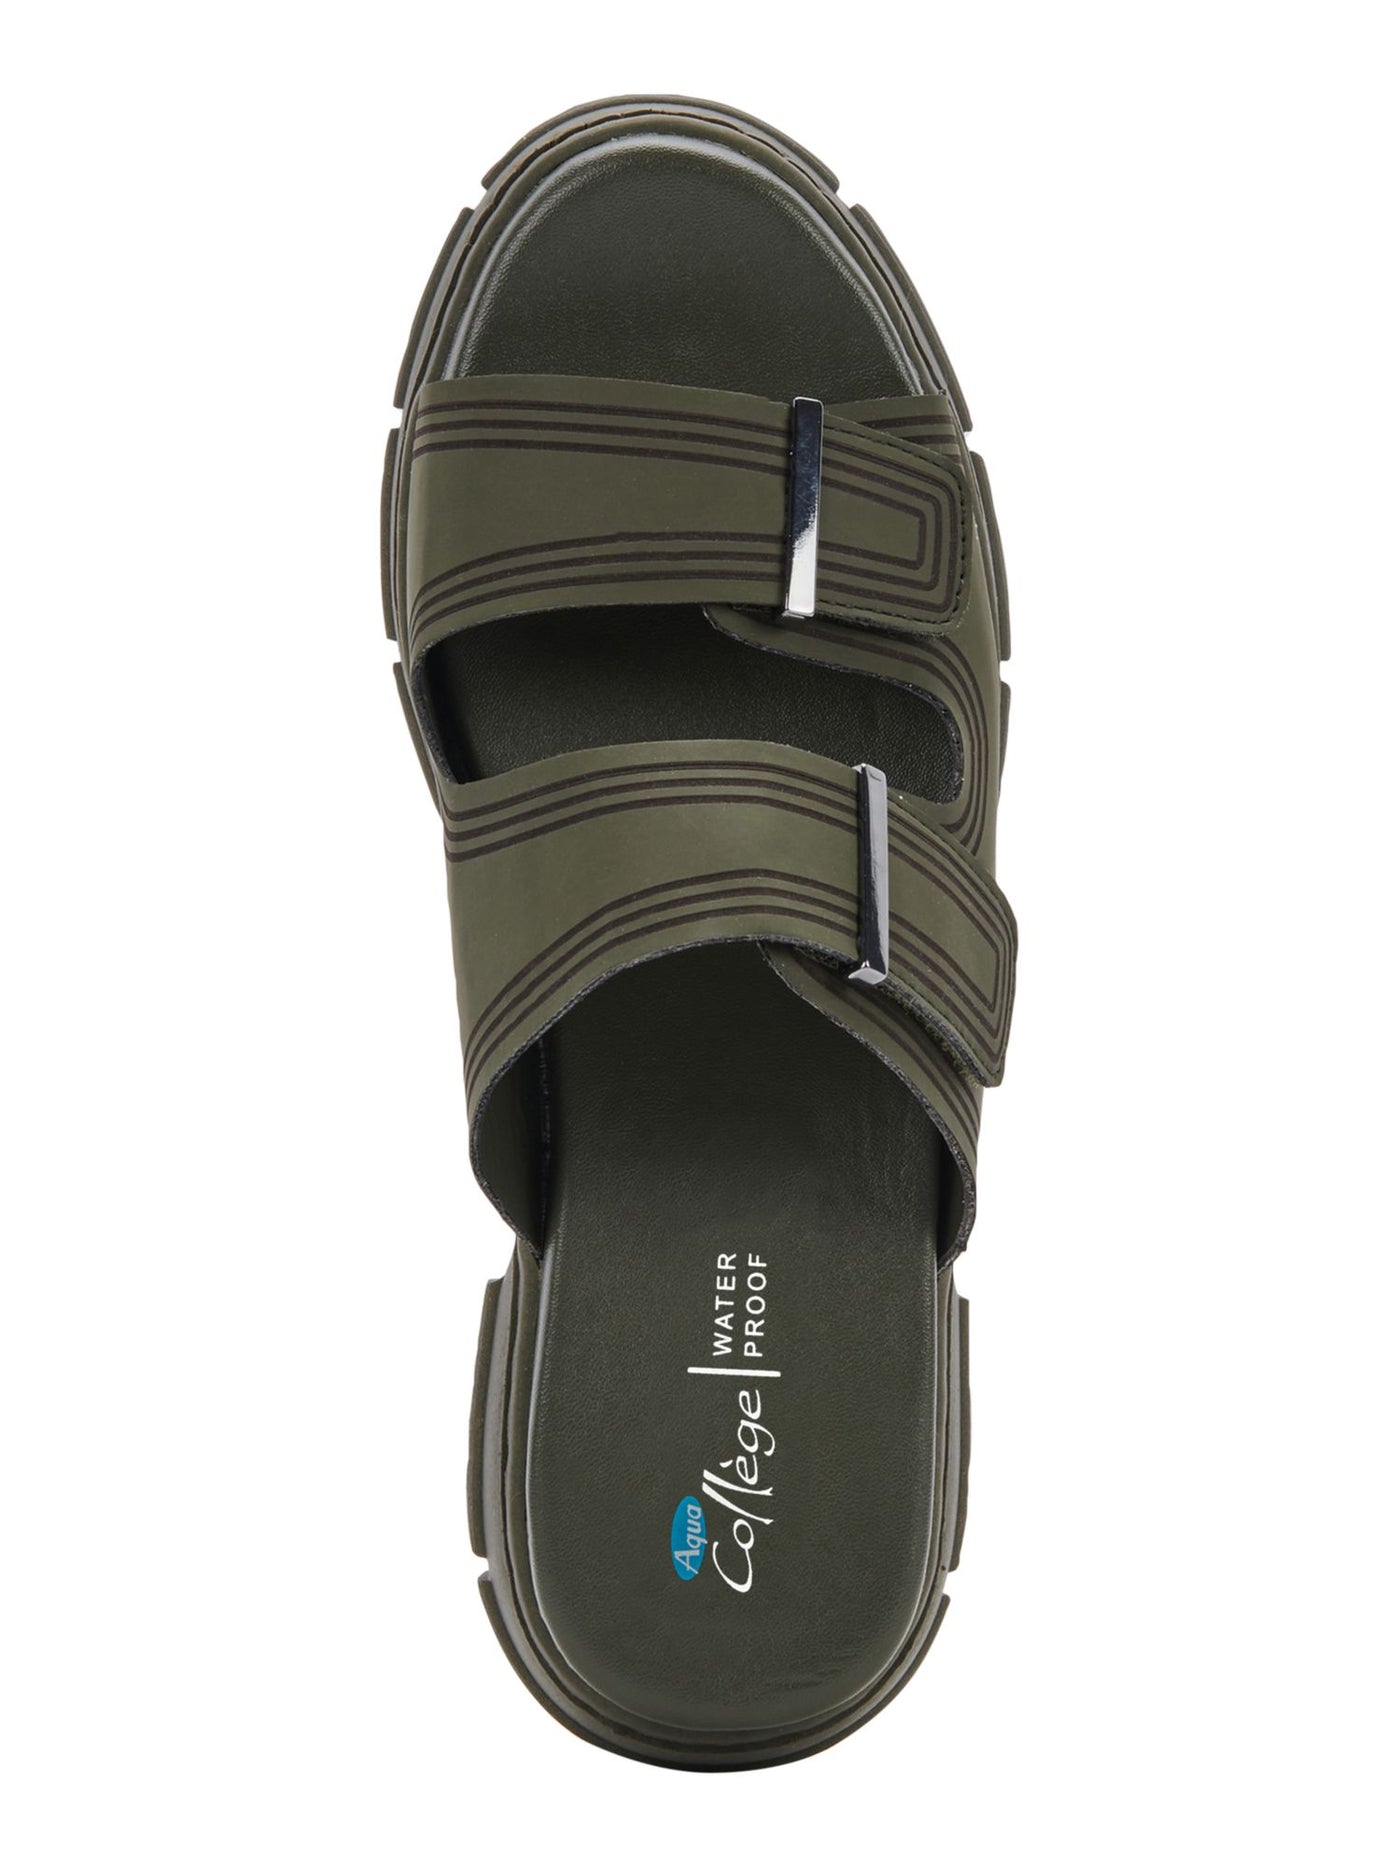 AQUA COLLEGE Womens Green Adjustable Strap Water Resistant Hippie Round Toe Block Heel Slip On Slide Sandals Shoes 9 M